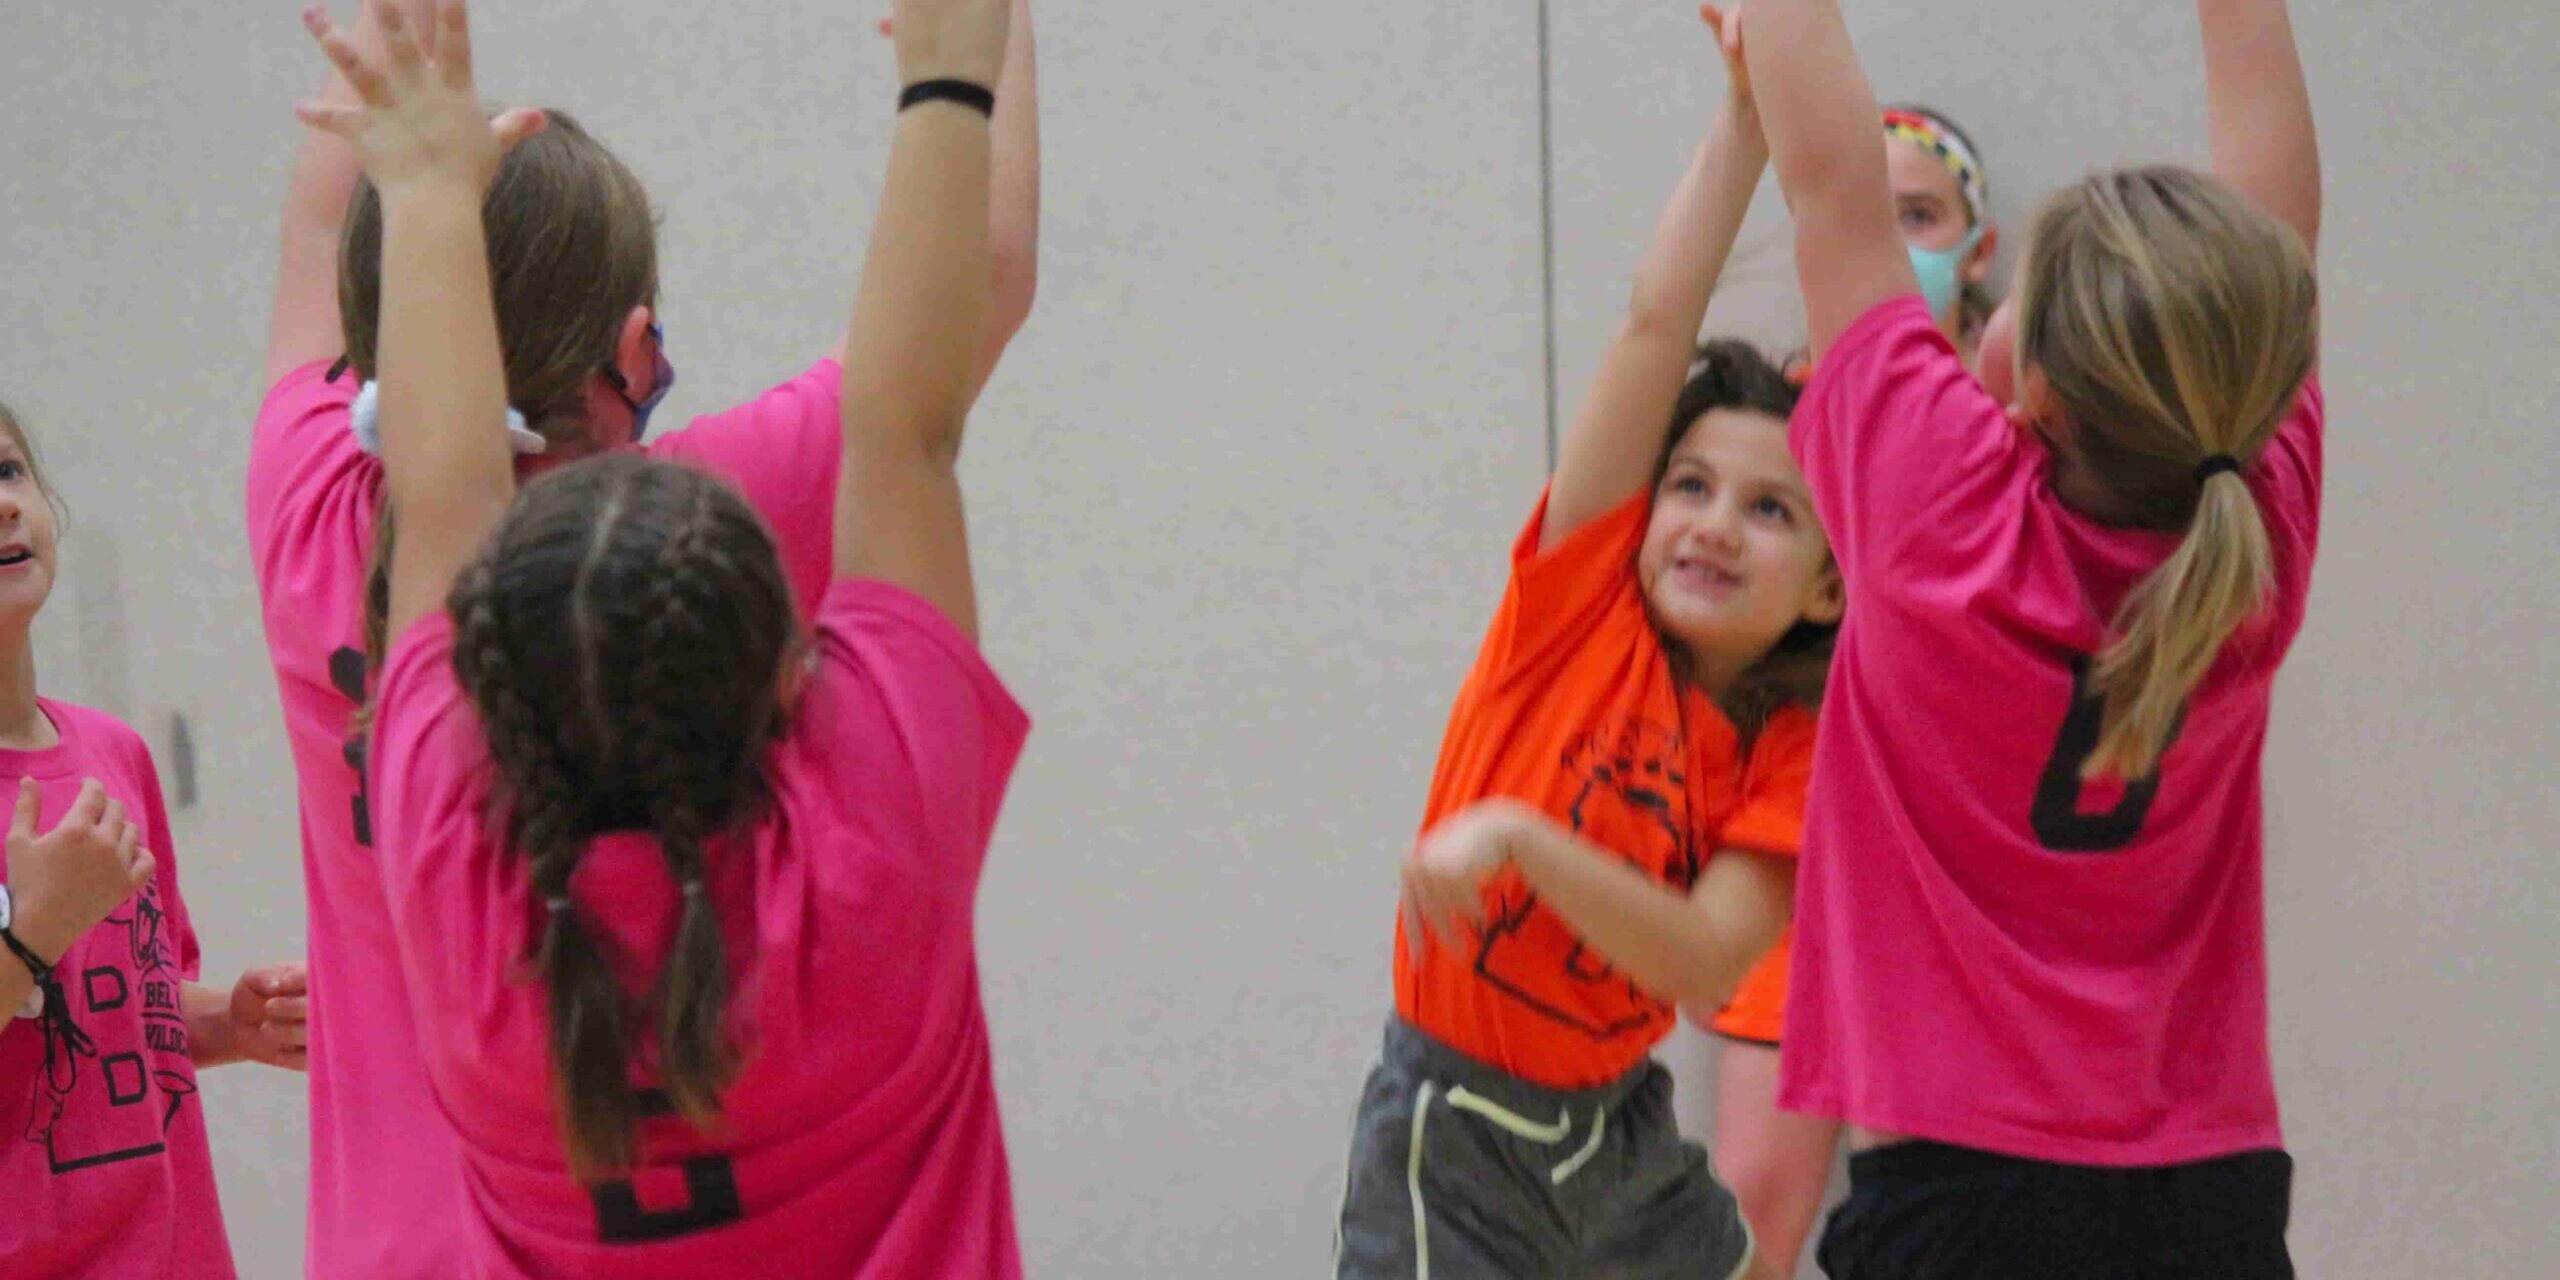 Bel Air Rec - Girls Basket Ball